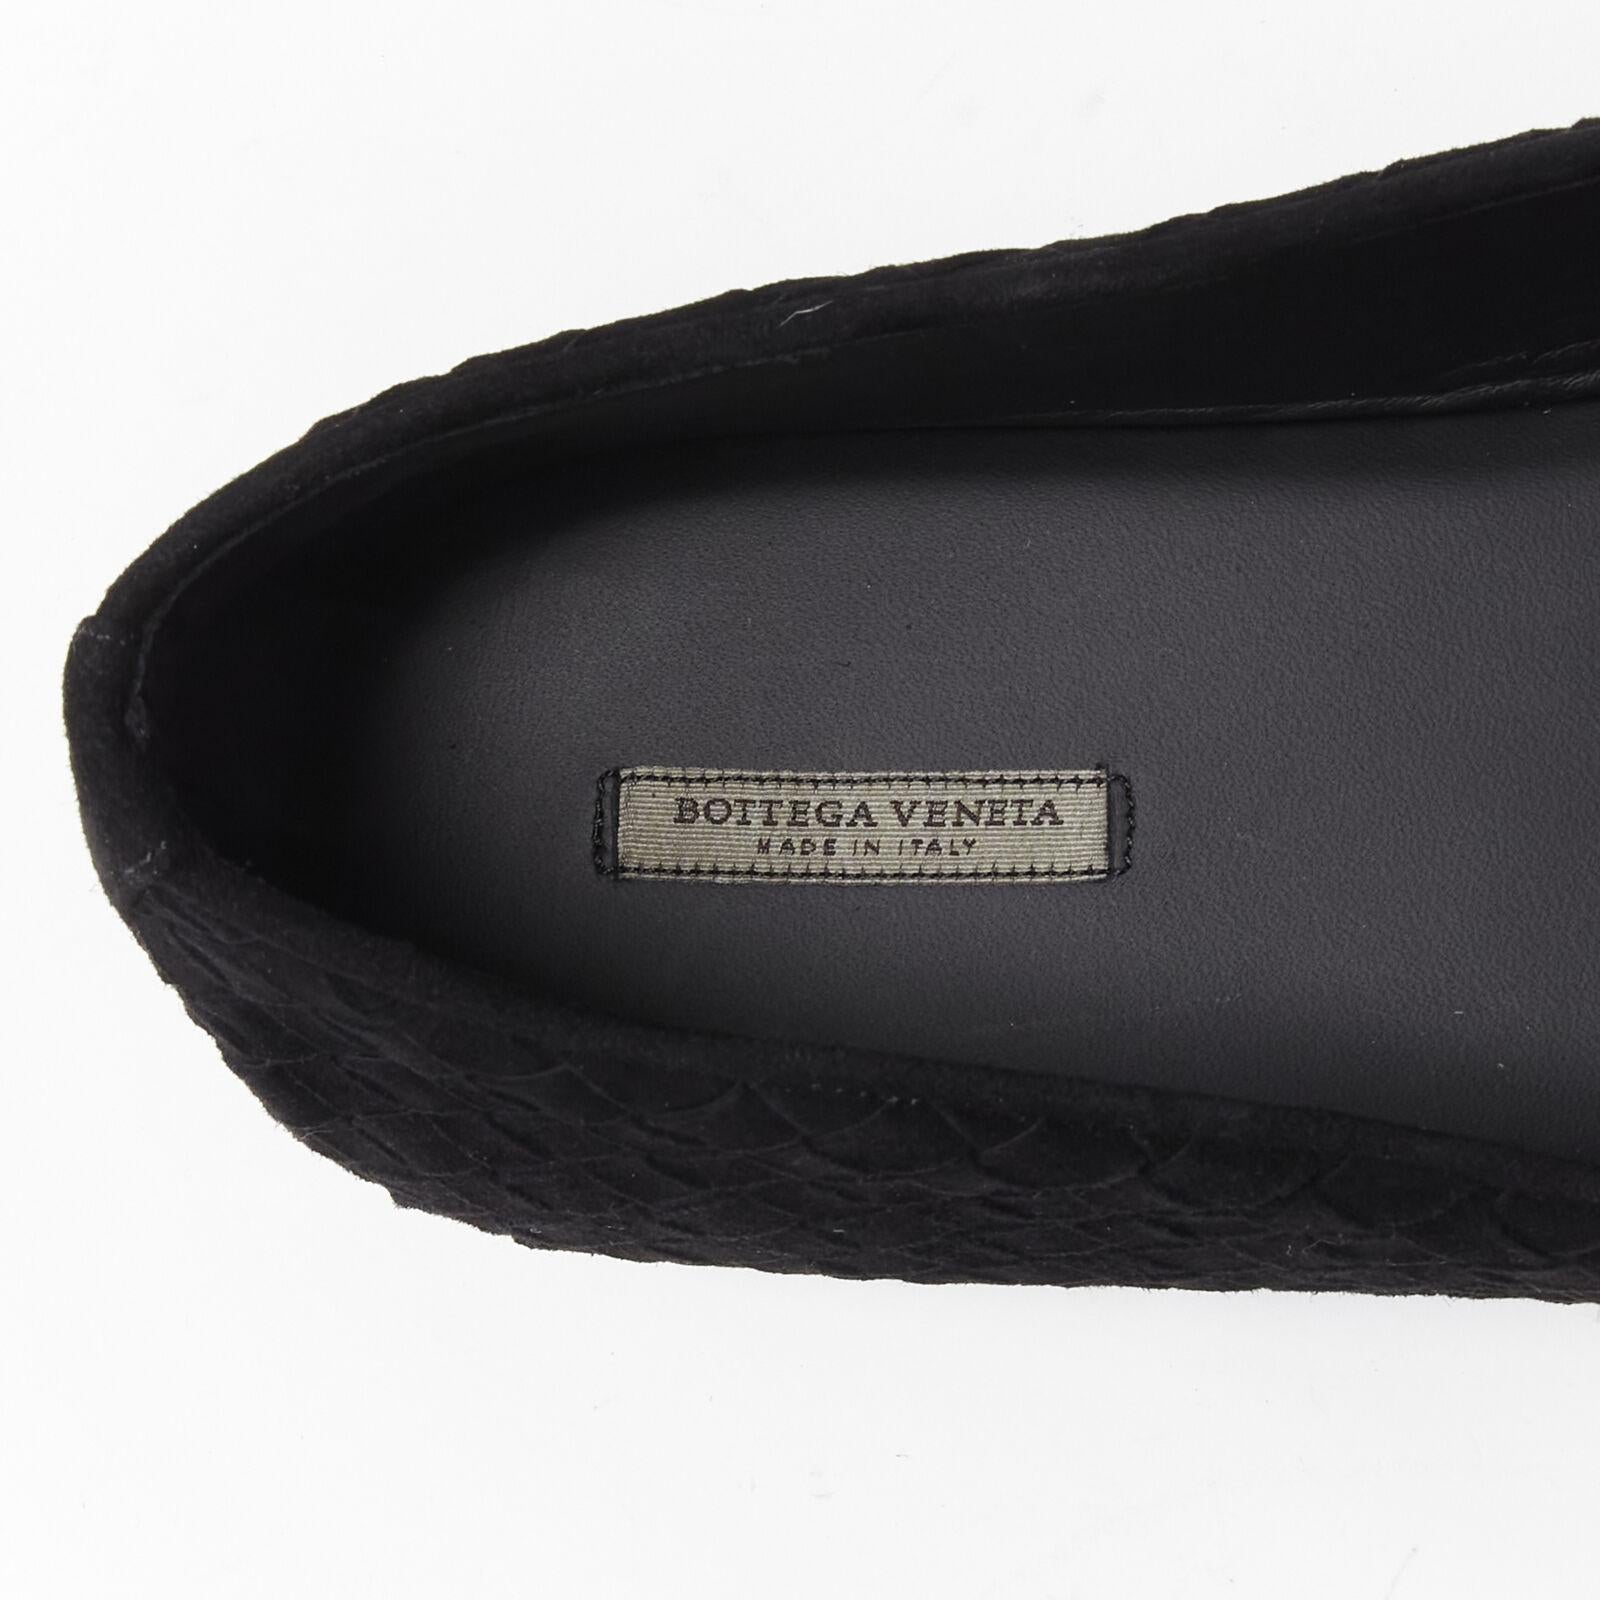 new BOTTEGA VENETA Intrecciato Luxe suede black woven dress loafer shoes EU43.5 For Sale 4